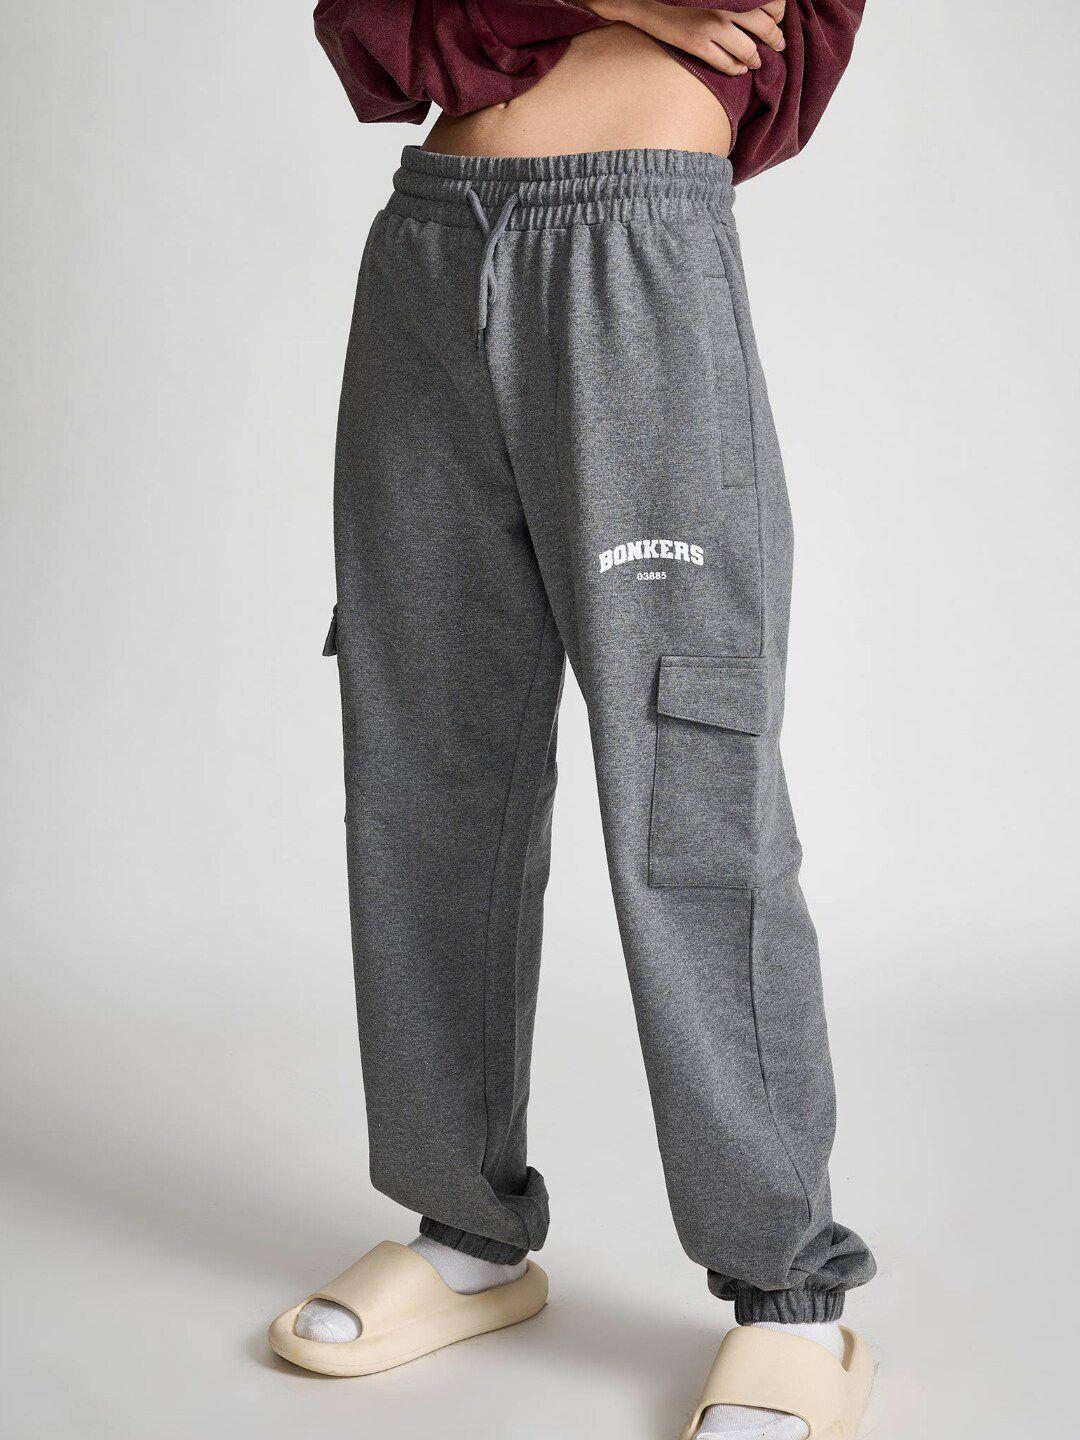 bonkers-corner-women-grey-cotton-cargo-track-pants